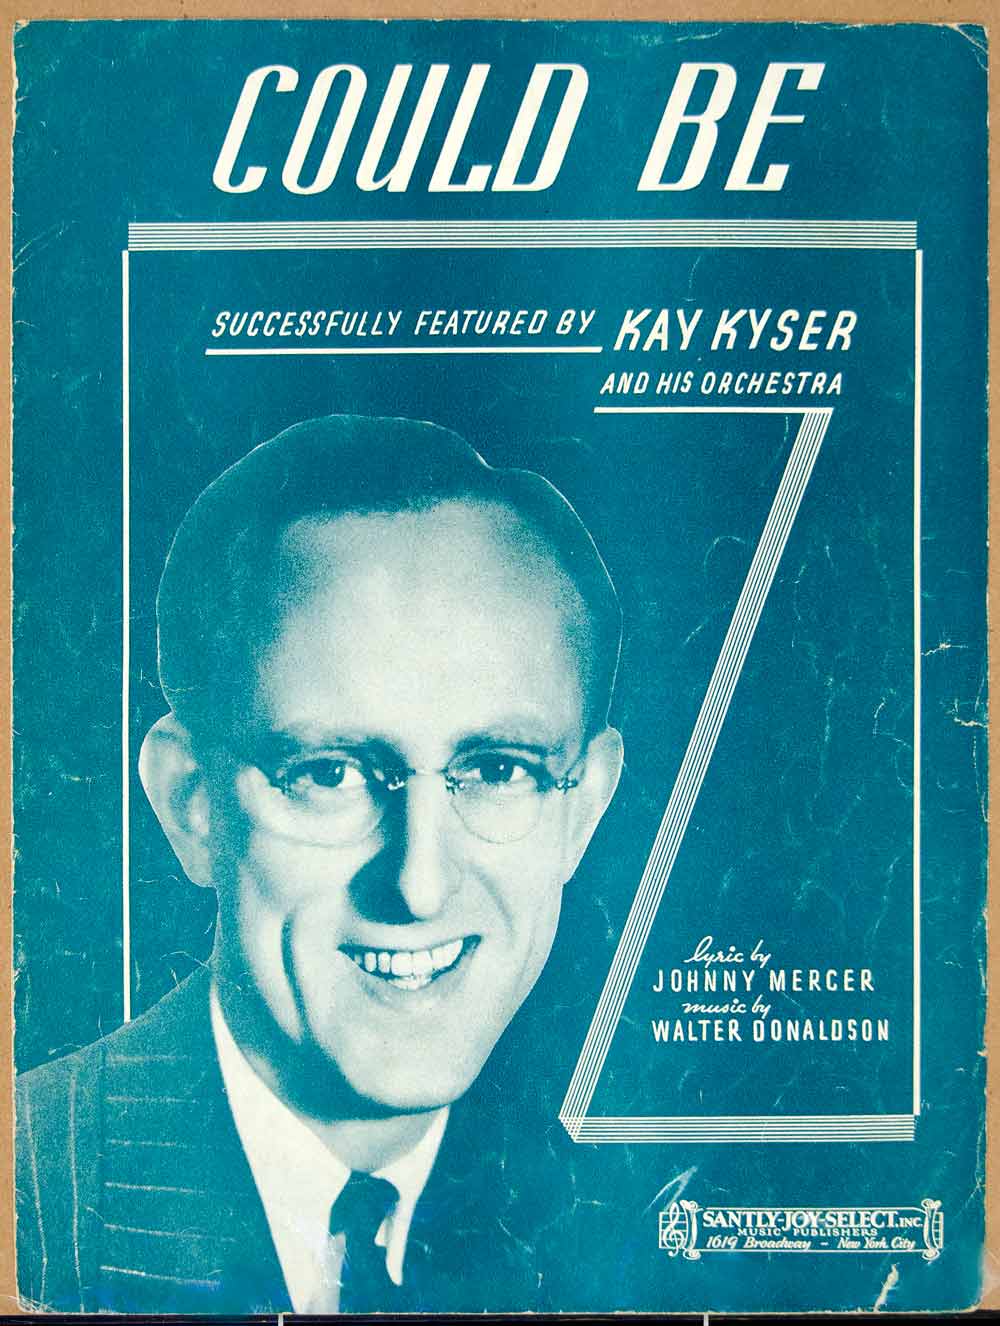 1938 Sheet Music Could Be Johnny Mercer Walter Donaldson Kay Kyser ZSM4